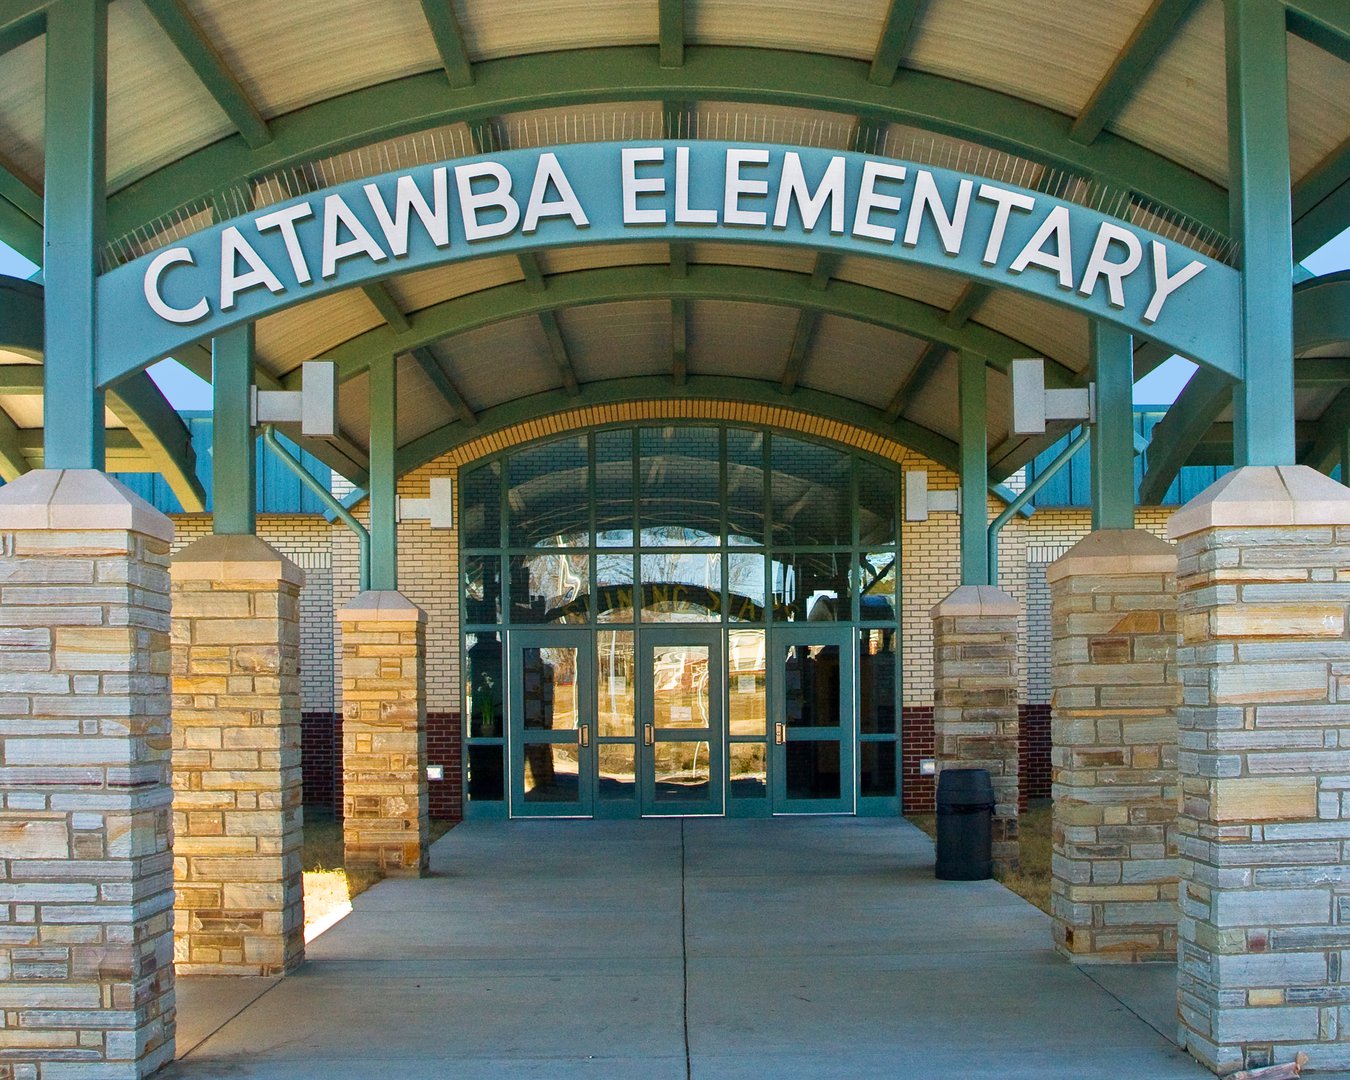 Catawba Elementary